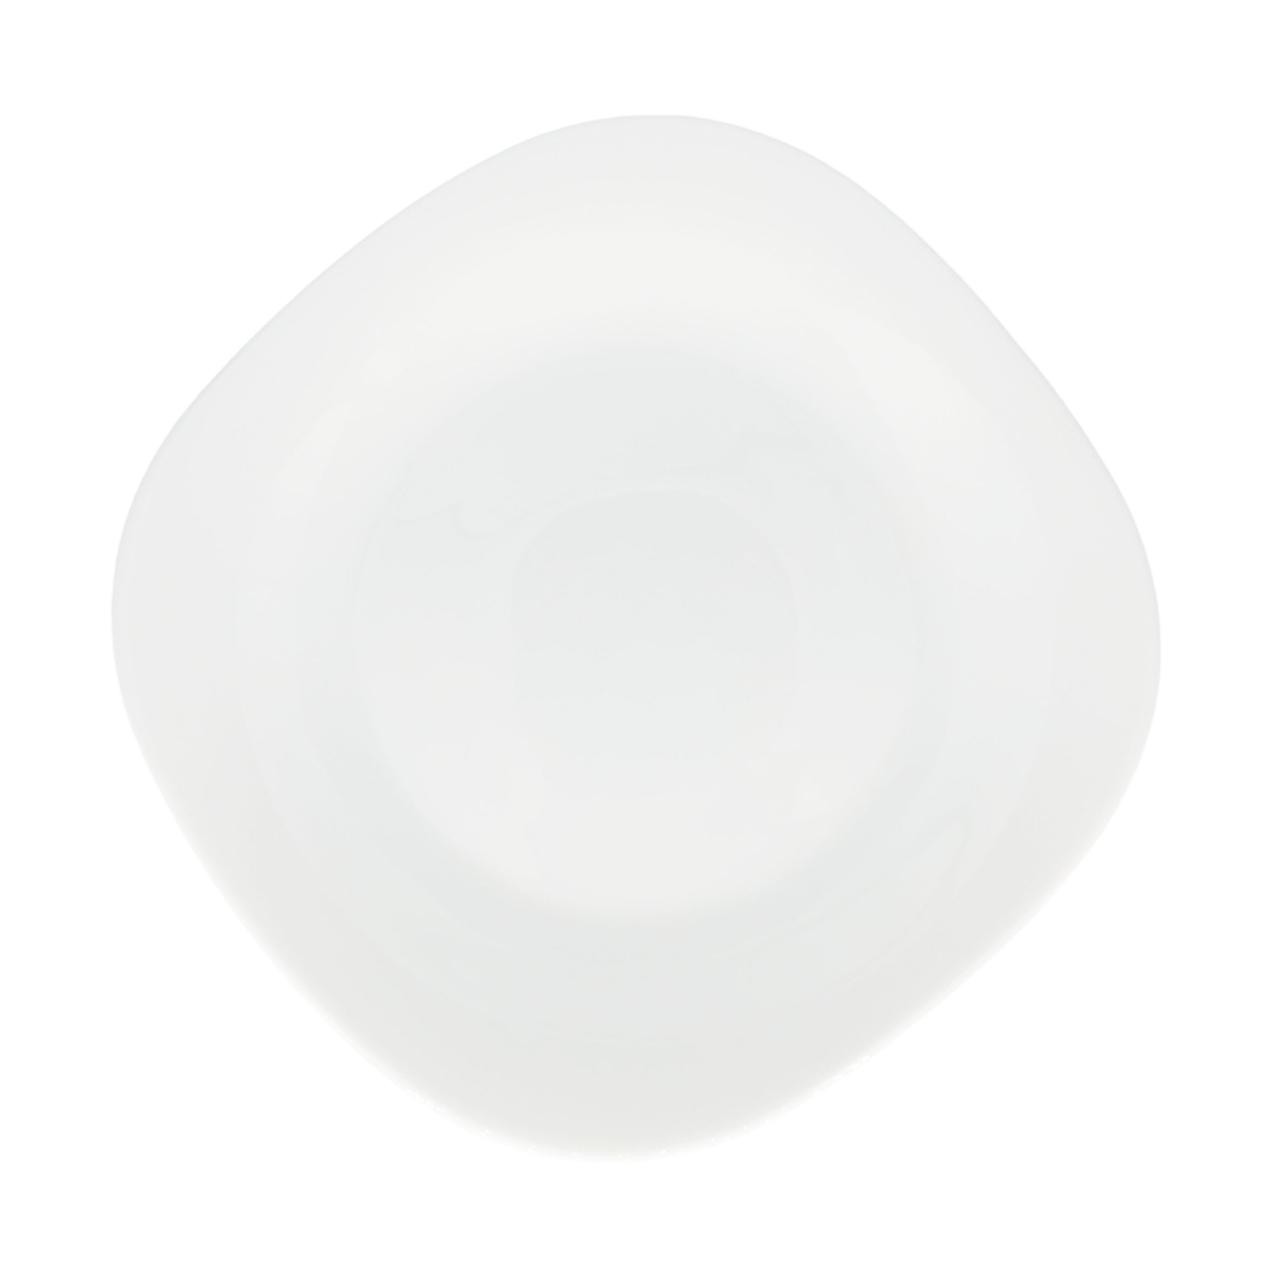 Тарелка обеденная Кулинарк белая каре 27 см тарелка обеденная кулинарк белая каре 27 см